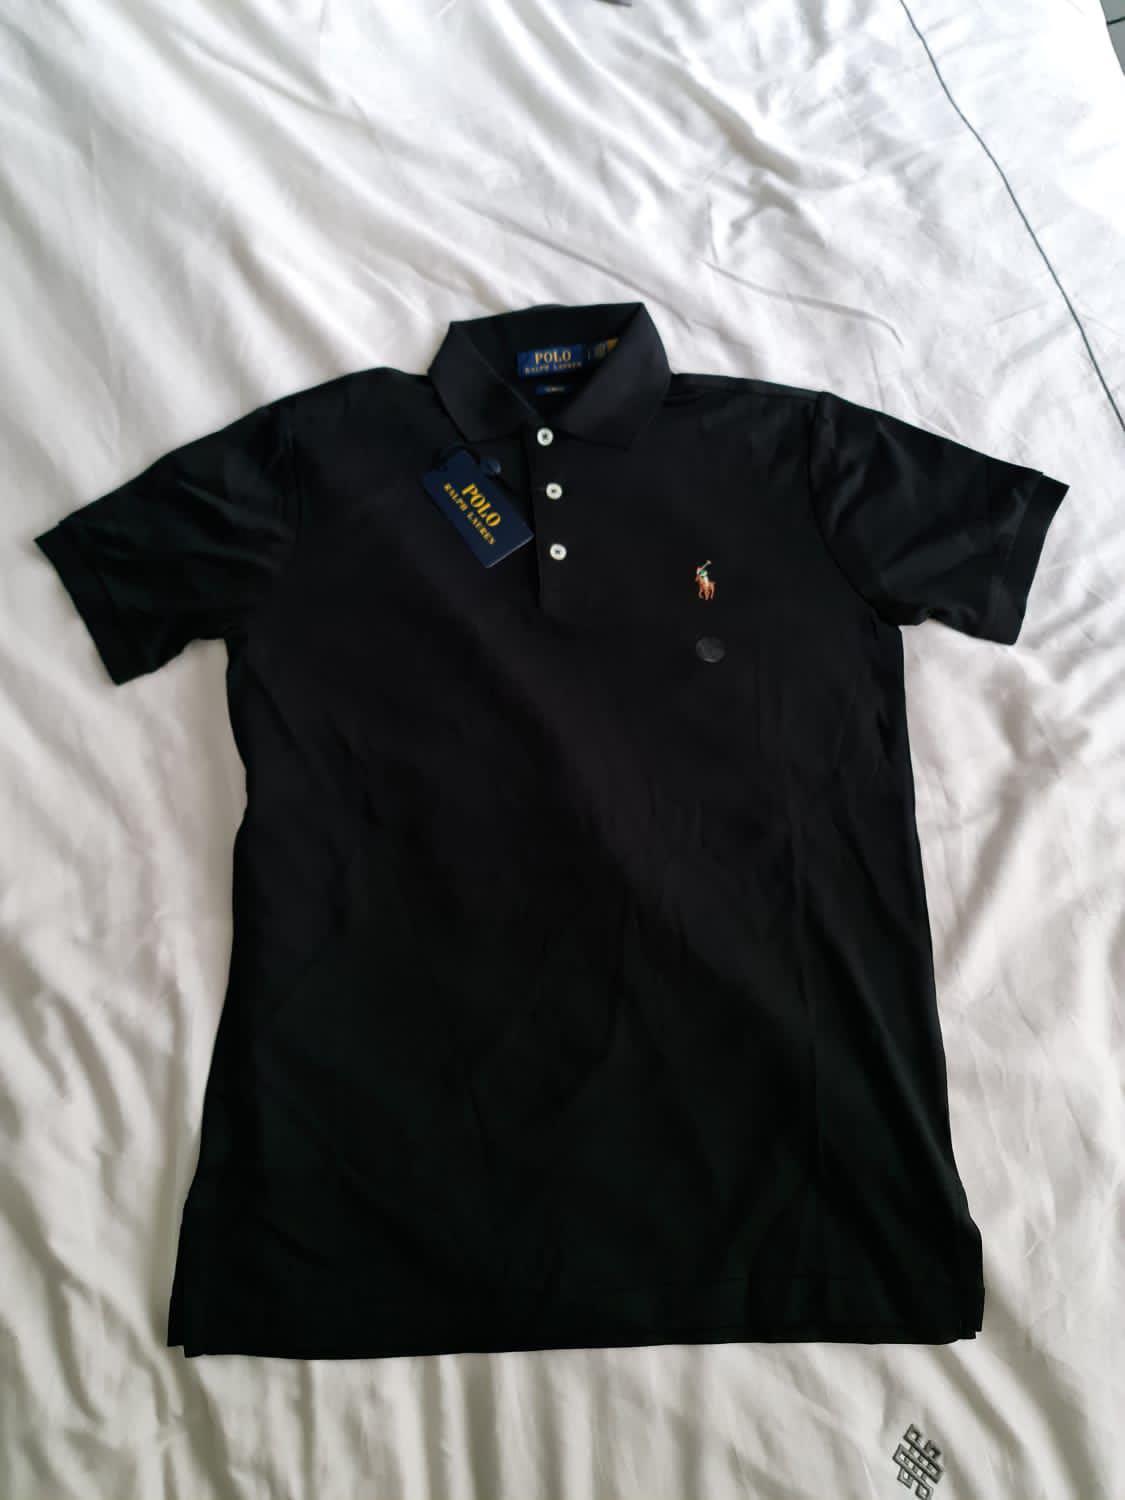 Polo Ralph Lauren slim fit pima polo multi player logo in black